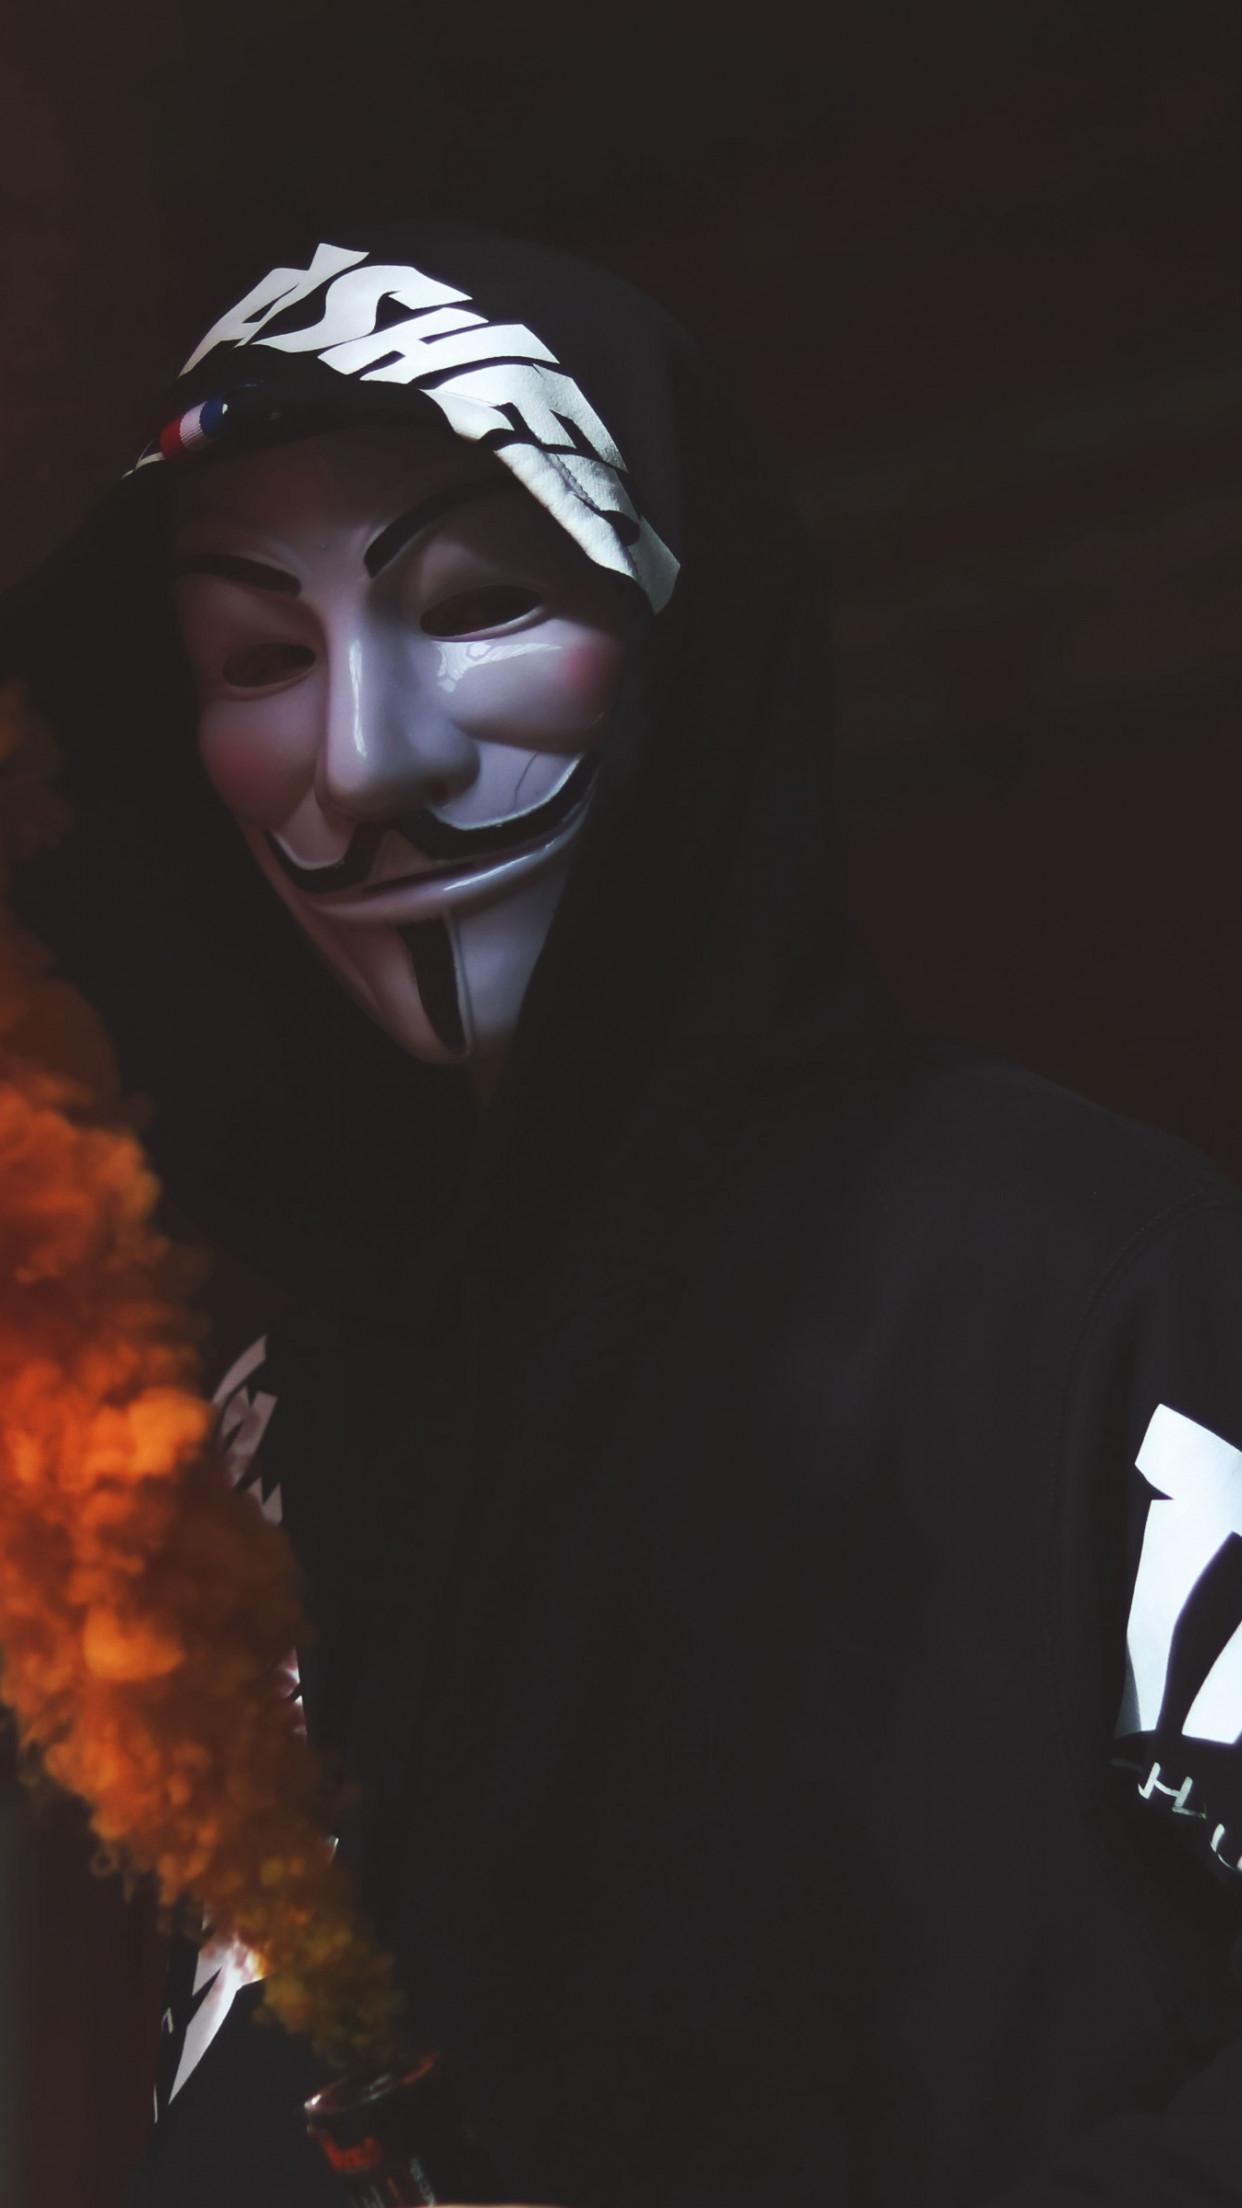 Download wallpaper: Anonymous mask and orange smoke 1242x2208